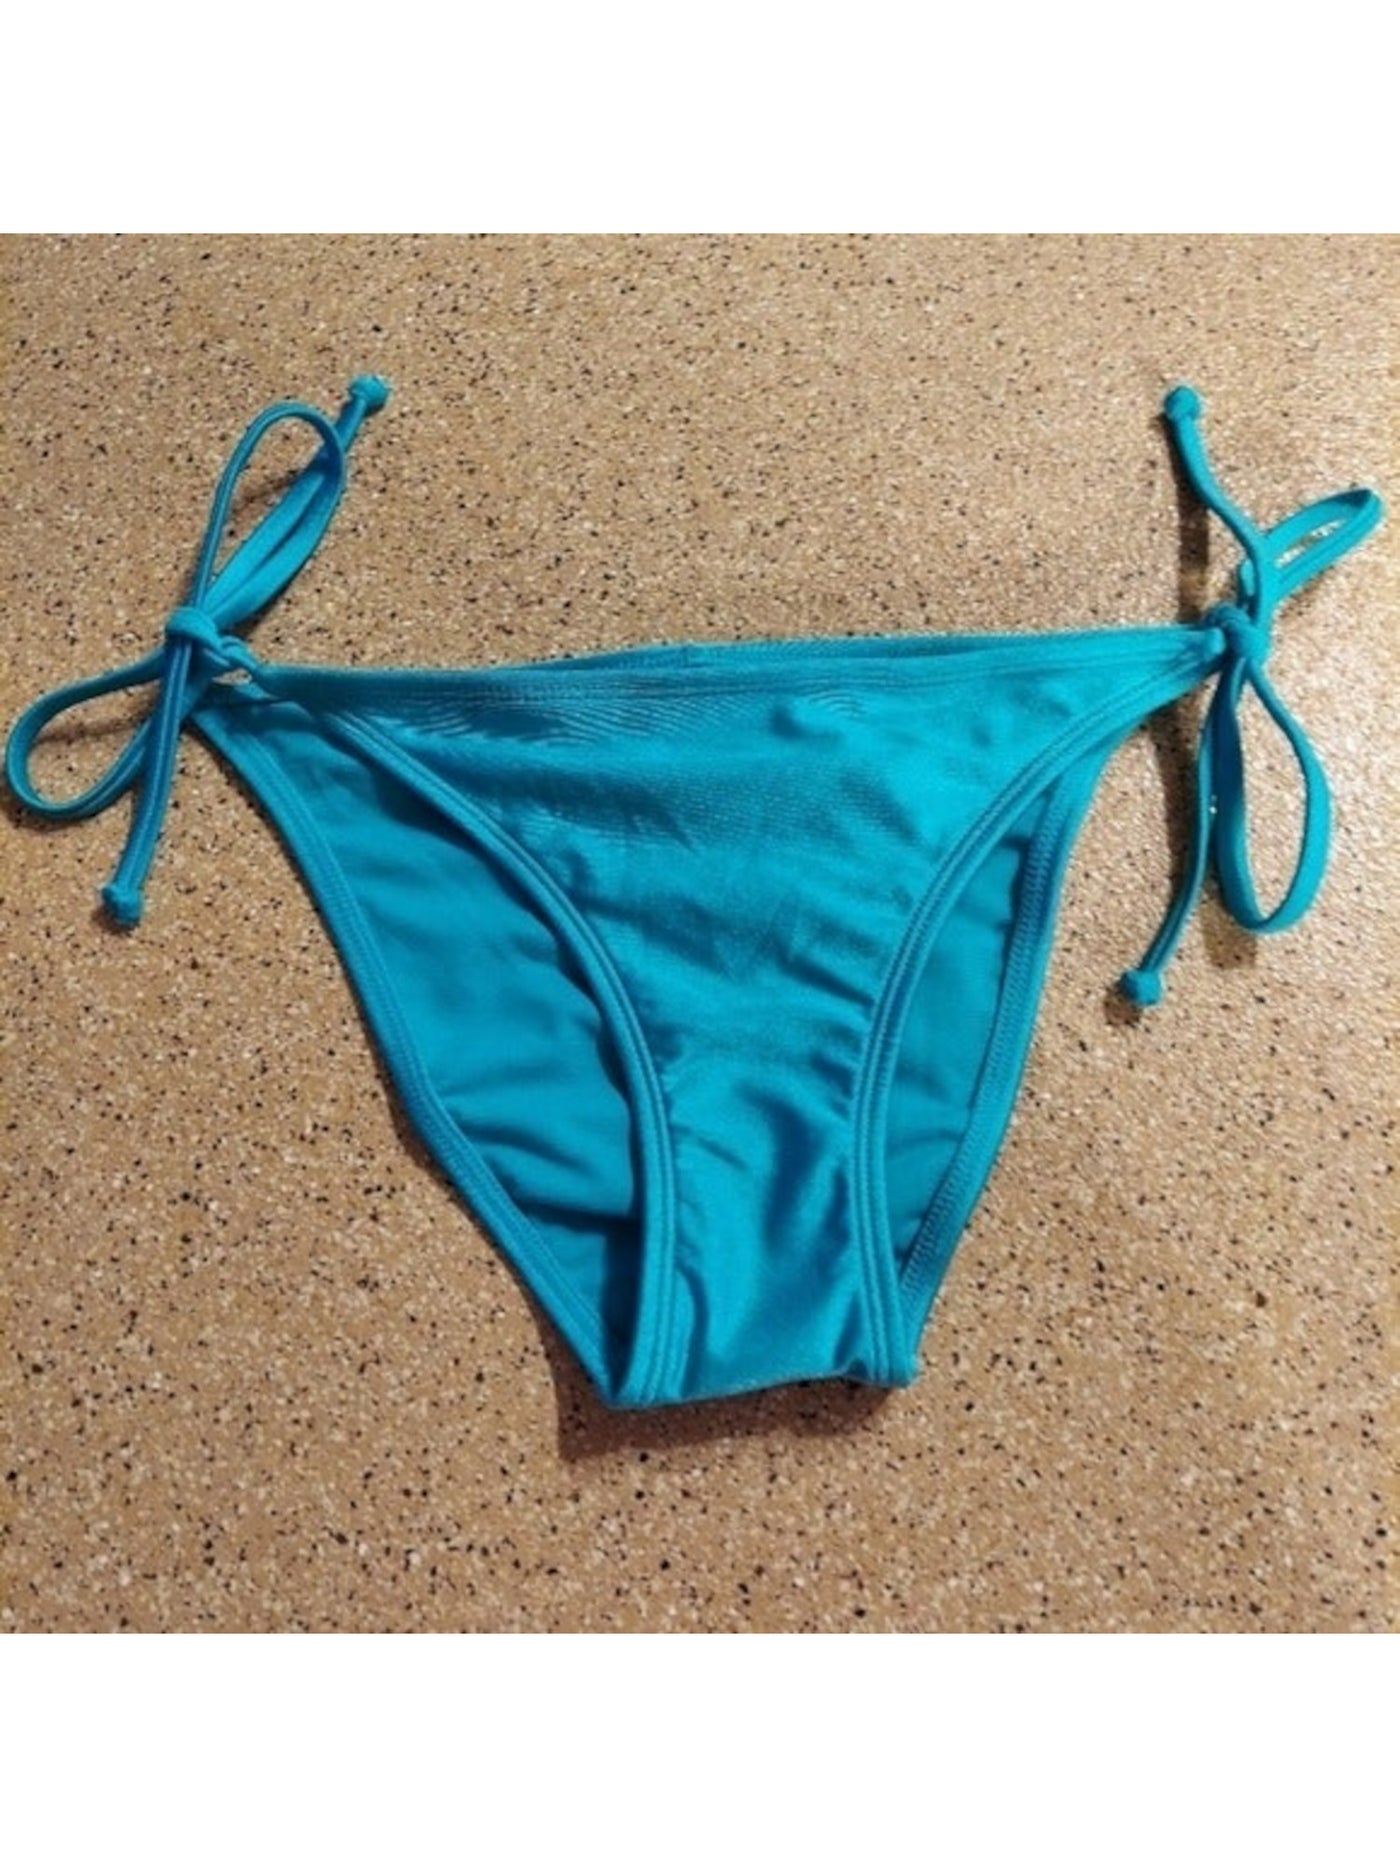 XHILARATION Women's Blue Bikini Swimwear Bottom S